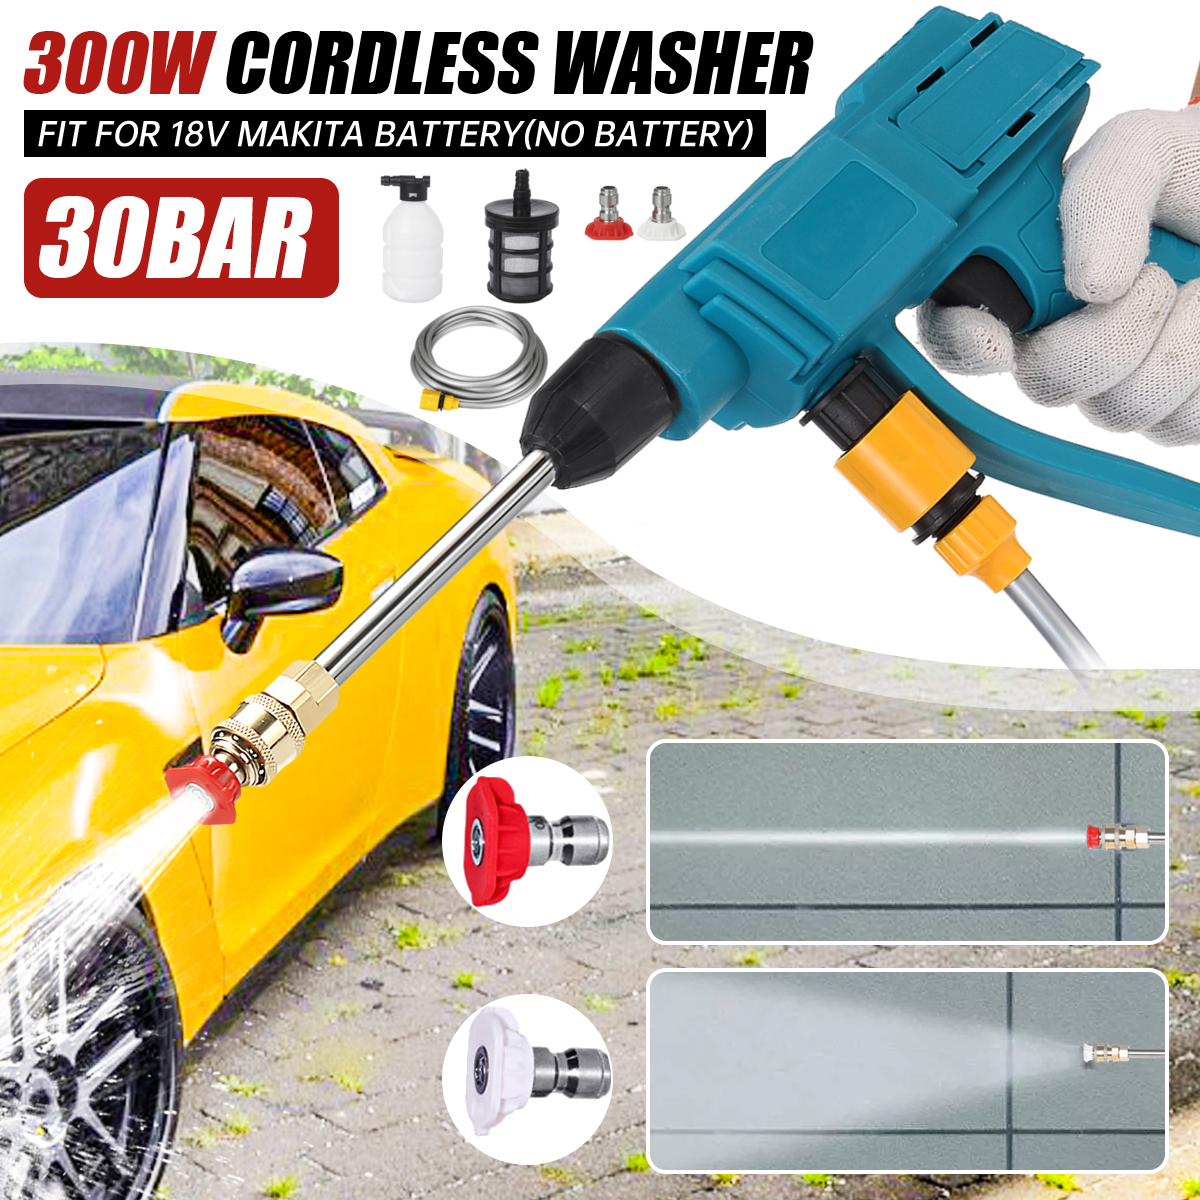 300W-Cordless-Electric-High-Pressure-Washer-Car-Washing-Machine-Car-Cleaning-Spray-Guns-for-Makita-1-1860681-2